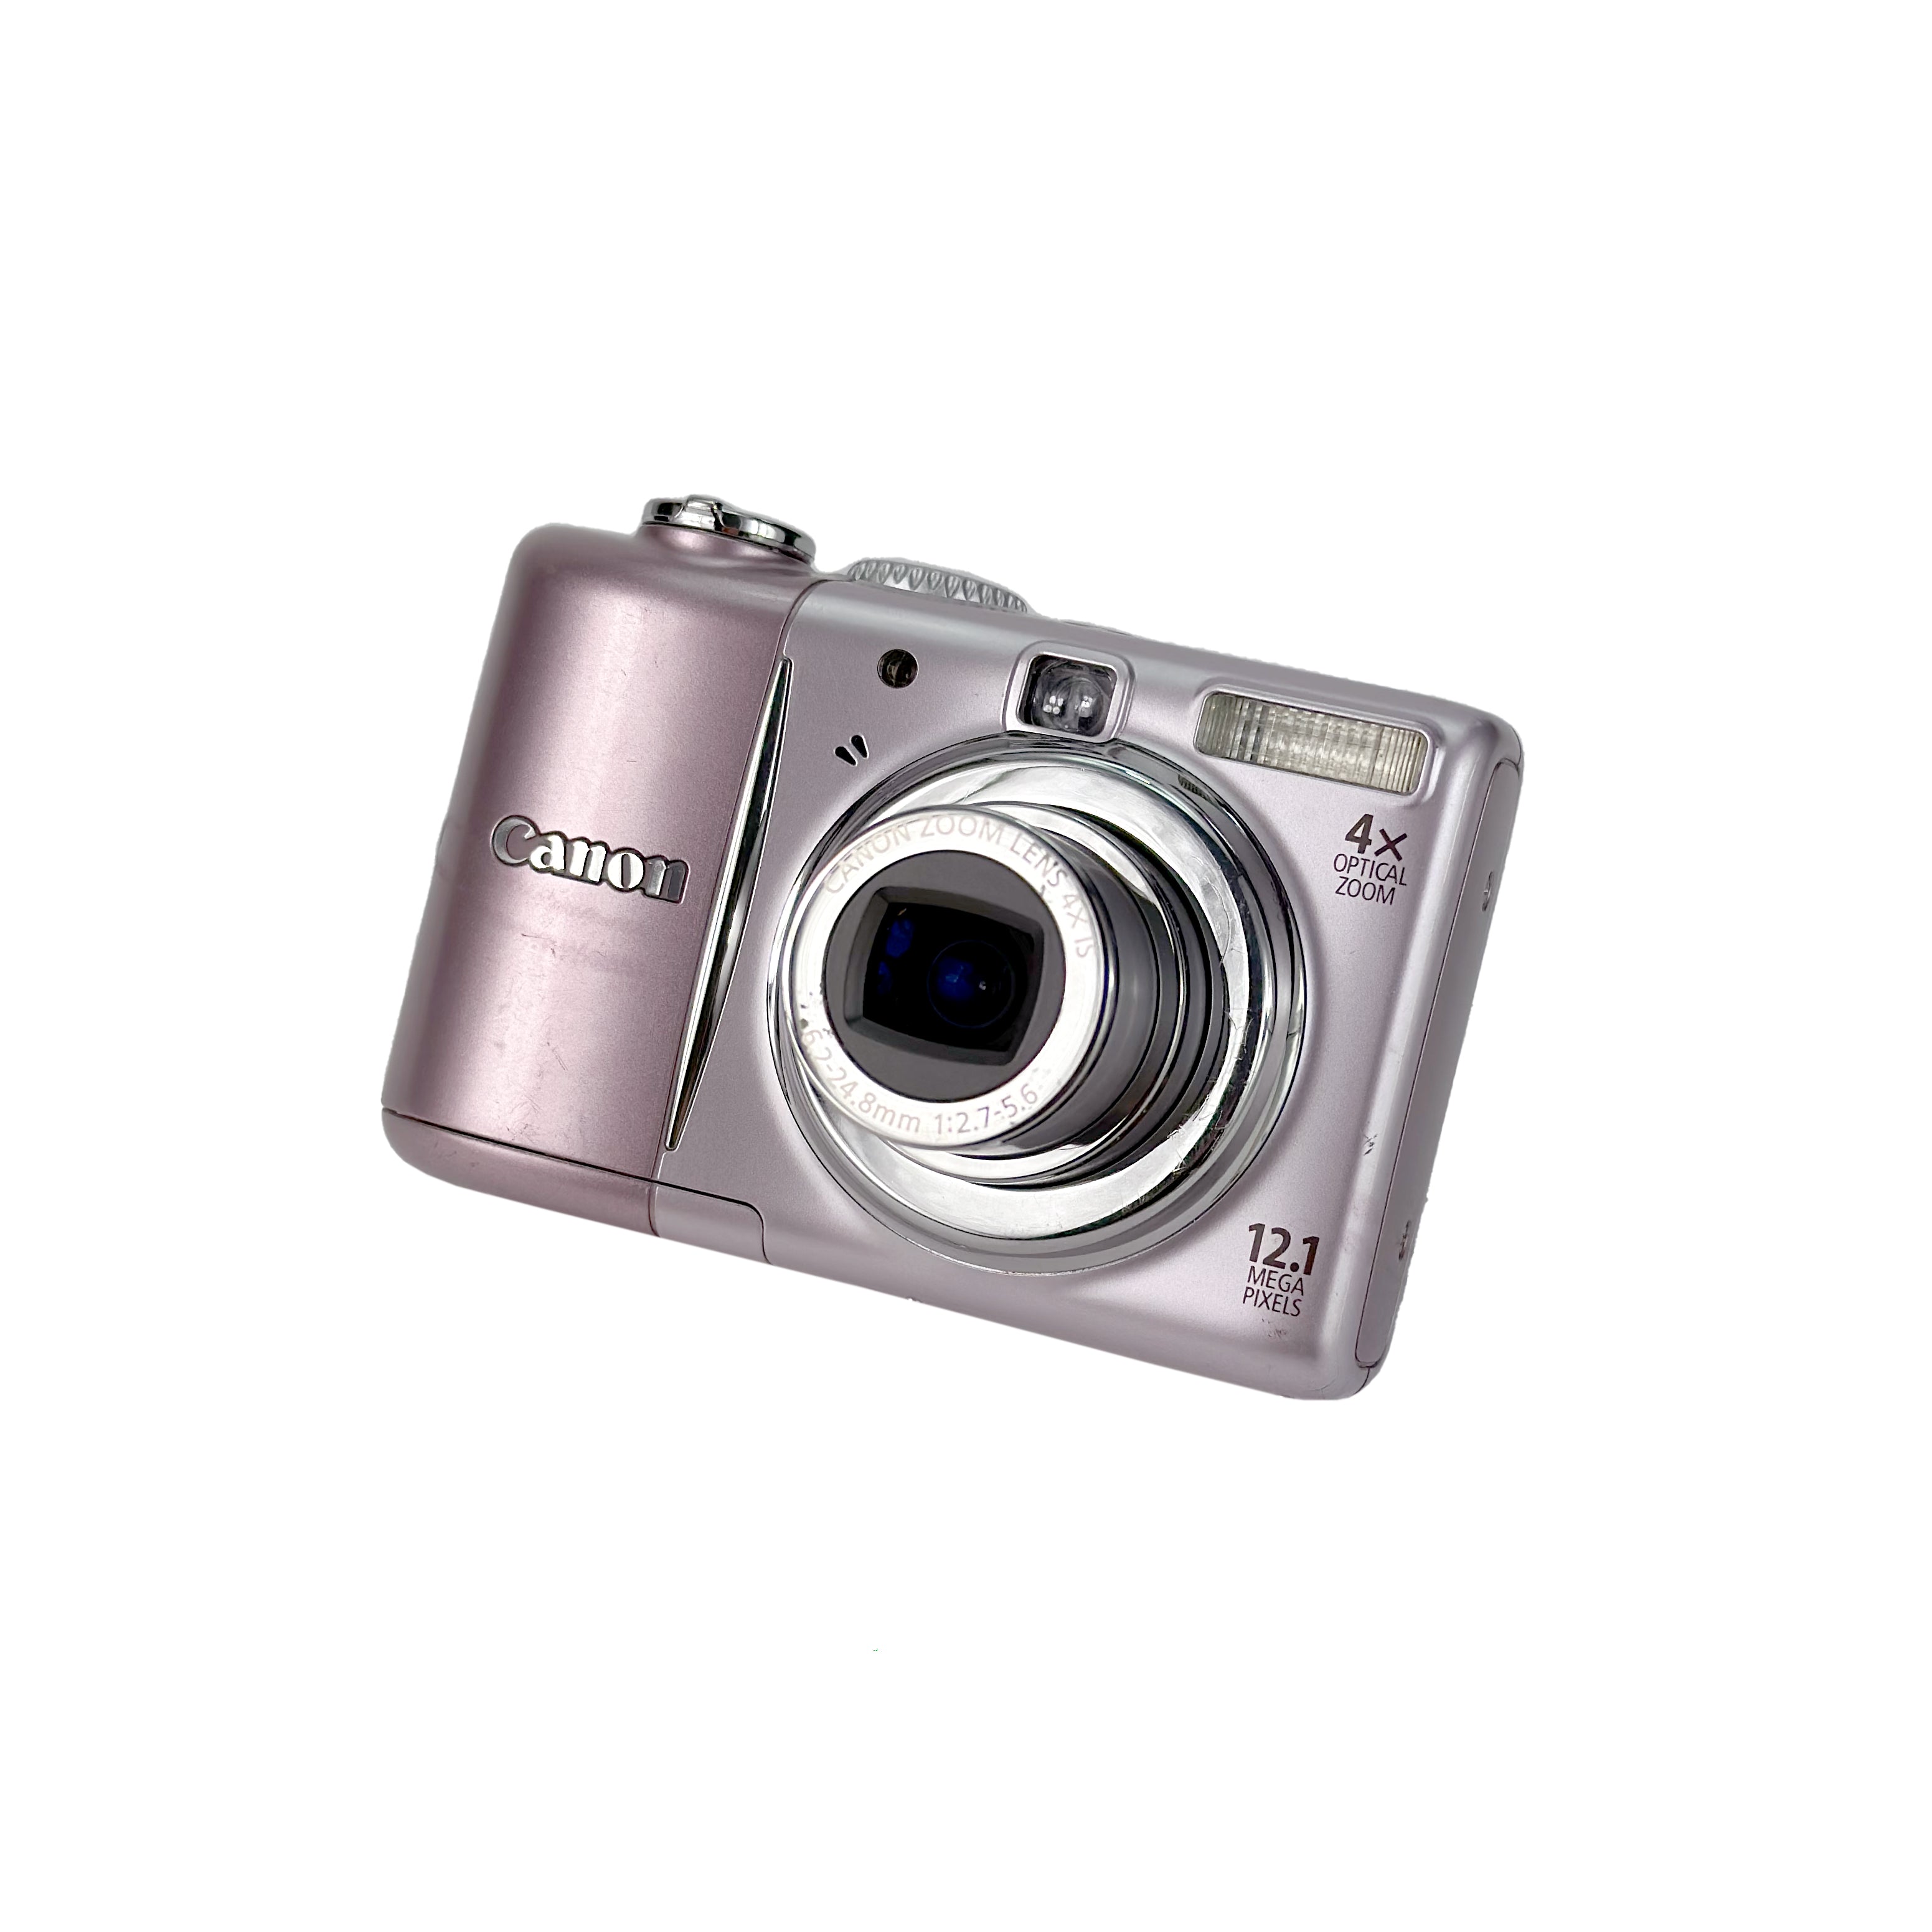 Canon PowerShot A1100 IS Digital Compact - Pink – Retro Camera Shop